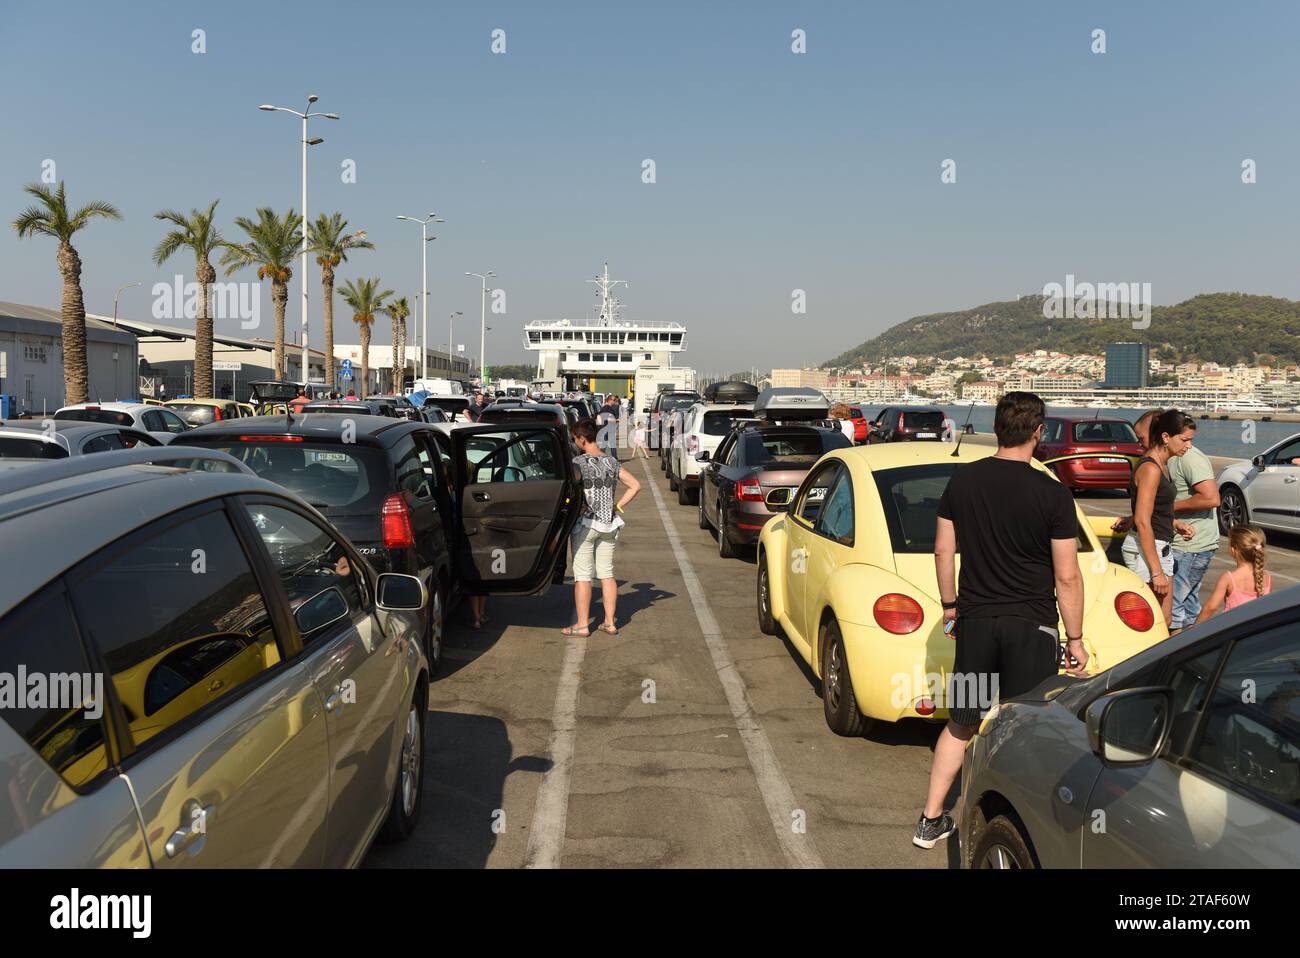 Split, Croatia - August 19, 2017: Cars waiting for ferry boarding in port of Split, Croatia. Stock Photo